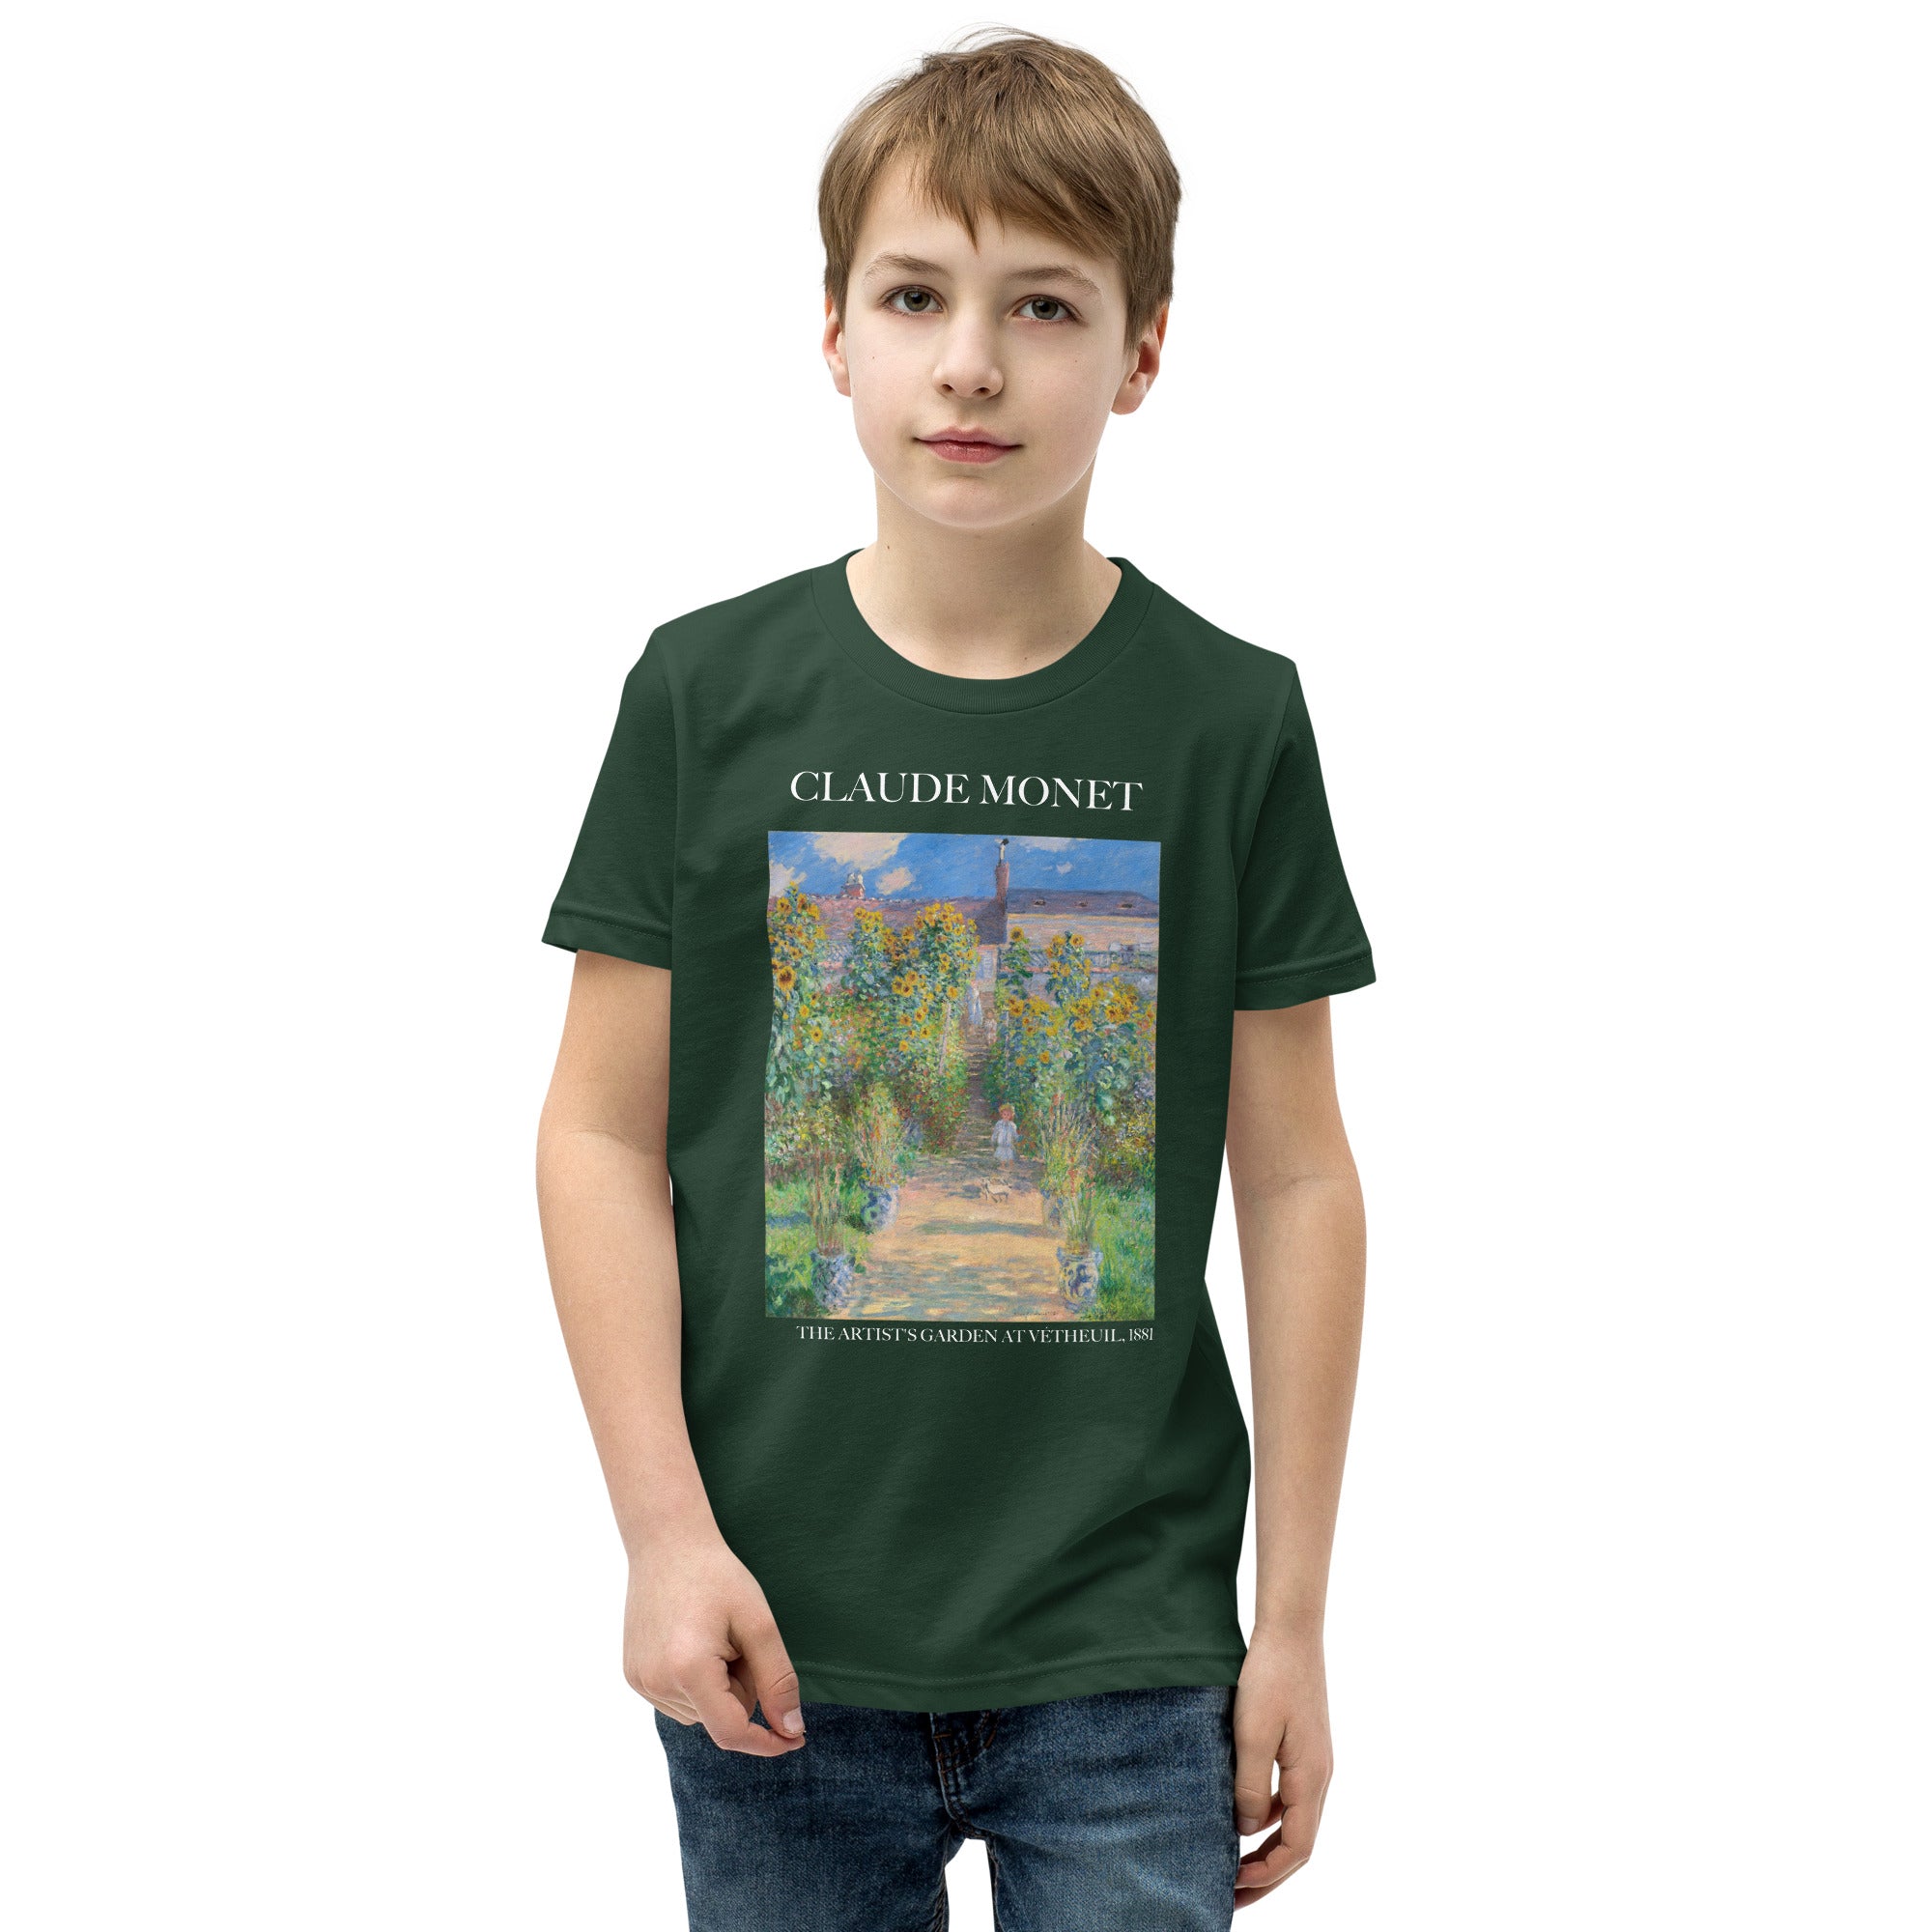 Claude Monet 'The Artist's Garden at Vétheuil' Famous Painting Short Sleeve T-Shirt | Premium Youth Art Tee